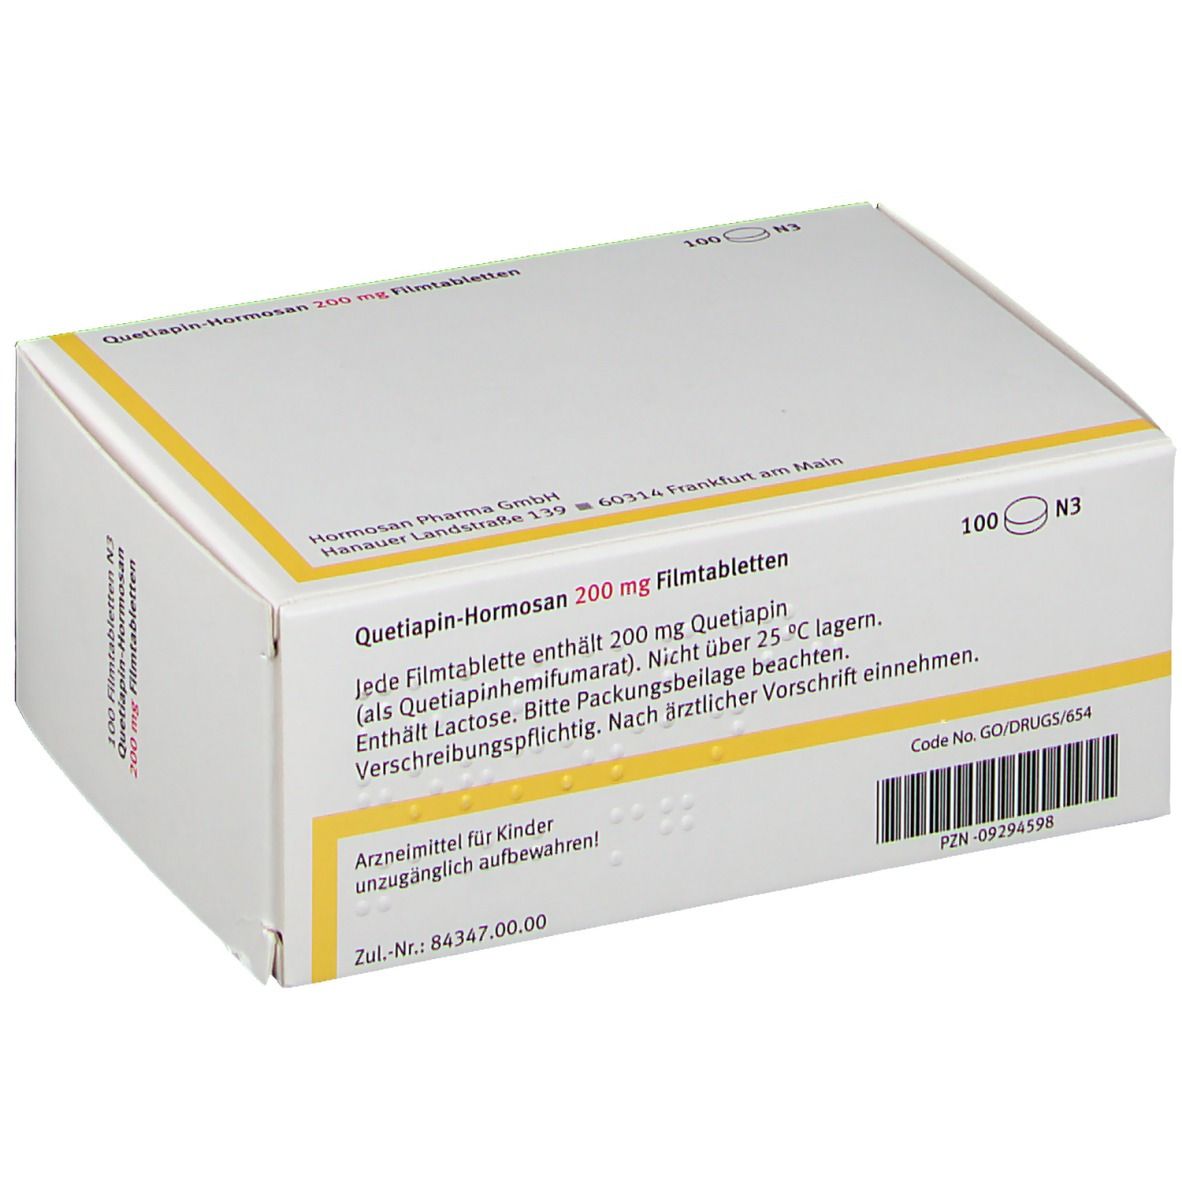 Quetiapin-Hormosan 200 mg